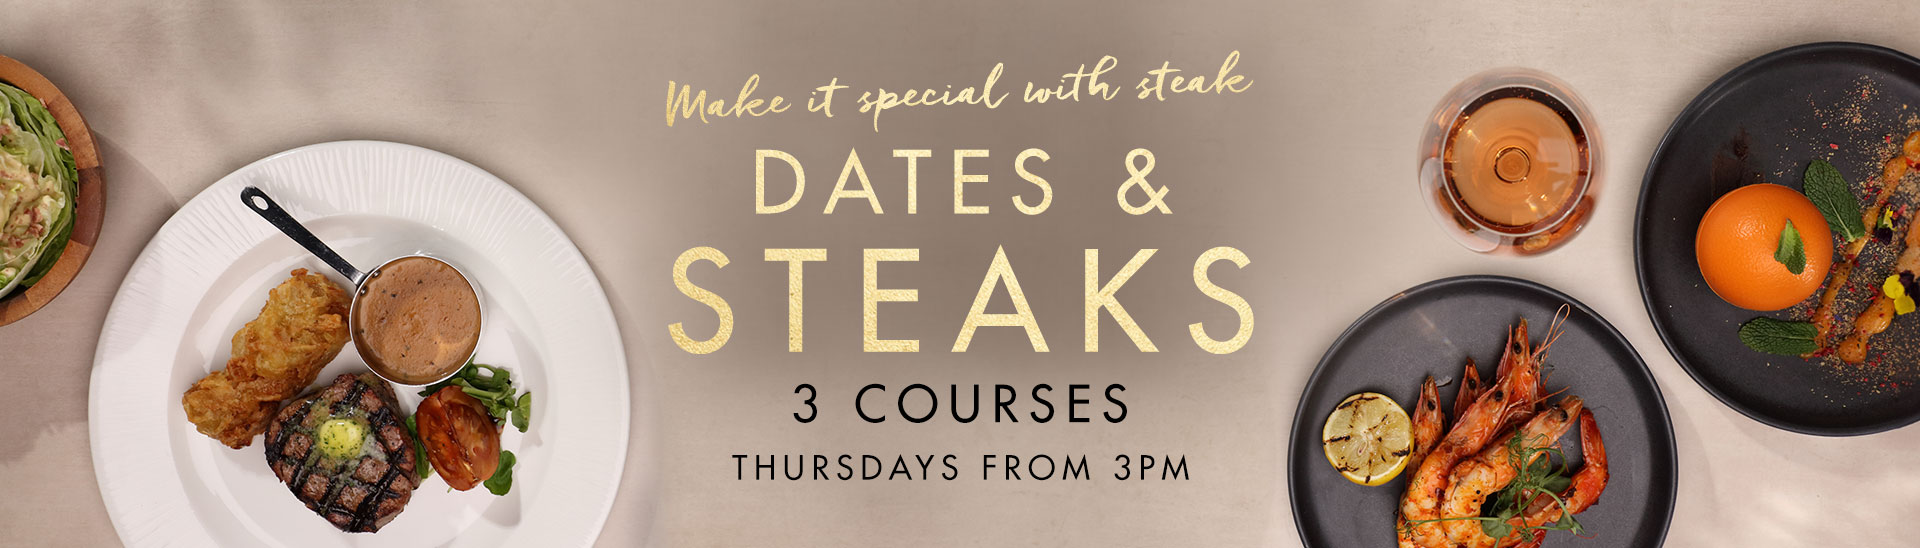 Dates & Steaks at Miller & Carter Woodford Green